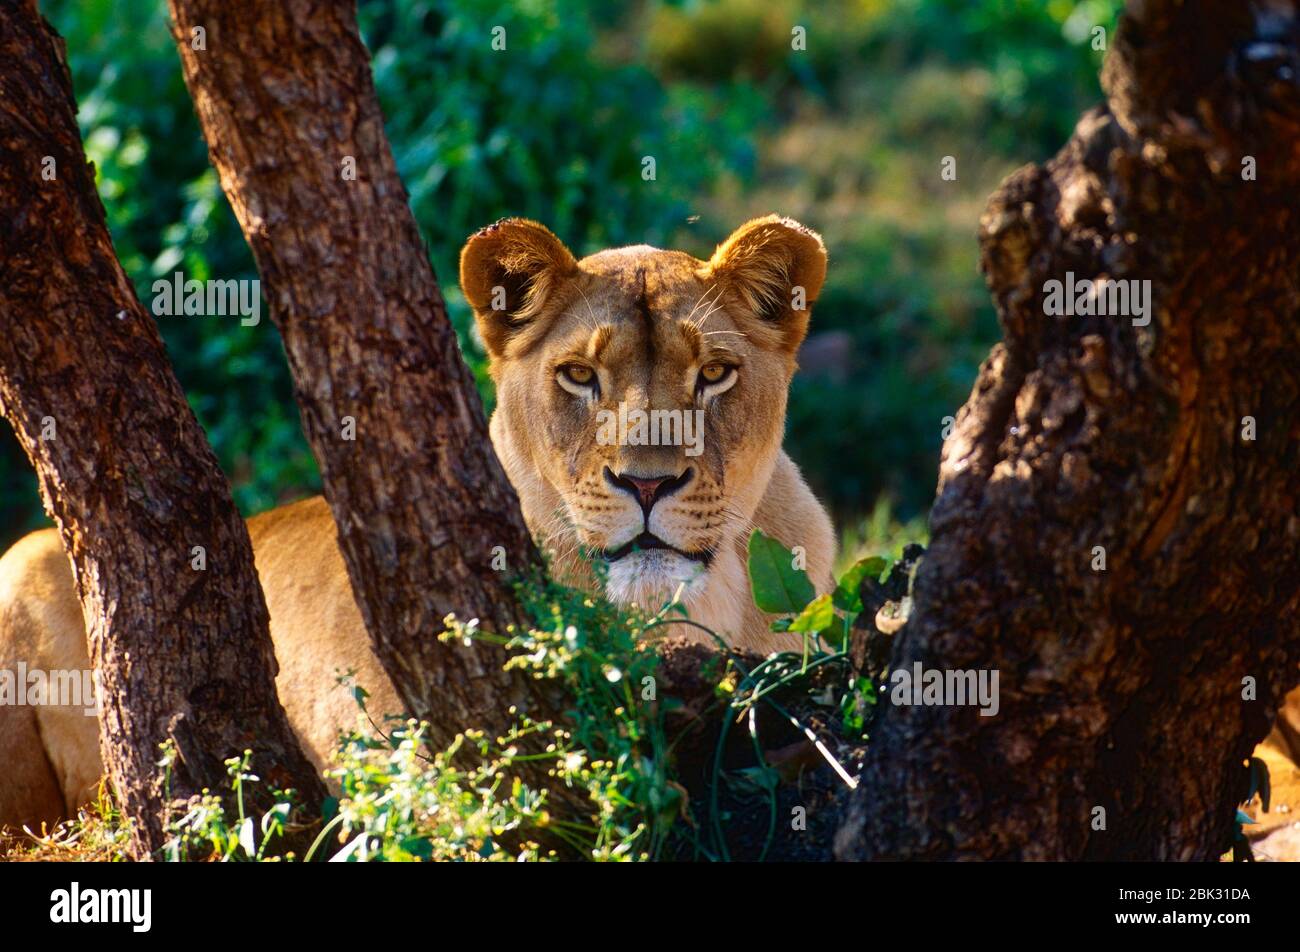 León, Panthera leo, Felidae, depredador, hembra, mamífero, animal, cautivo, Zoo, Pretoria, Sudáfrica Foto de stock